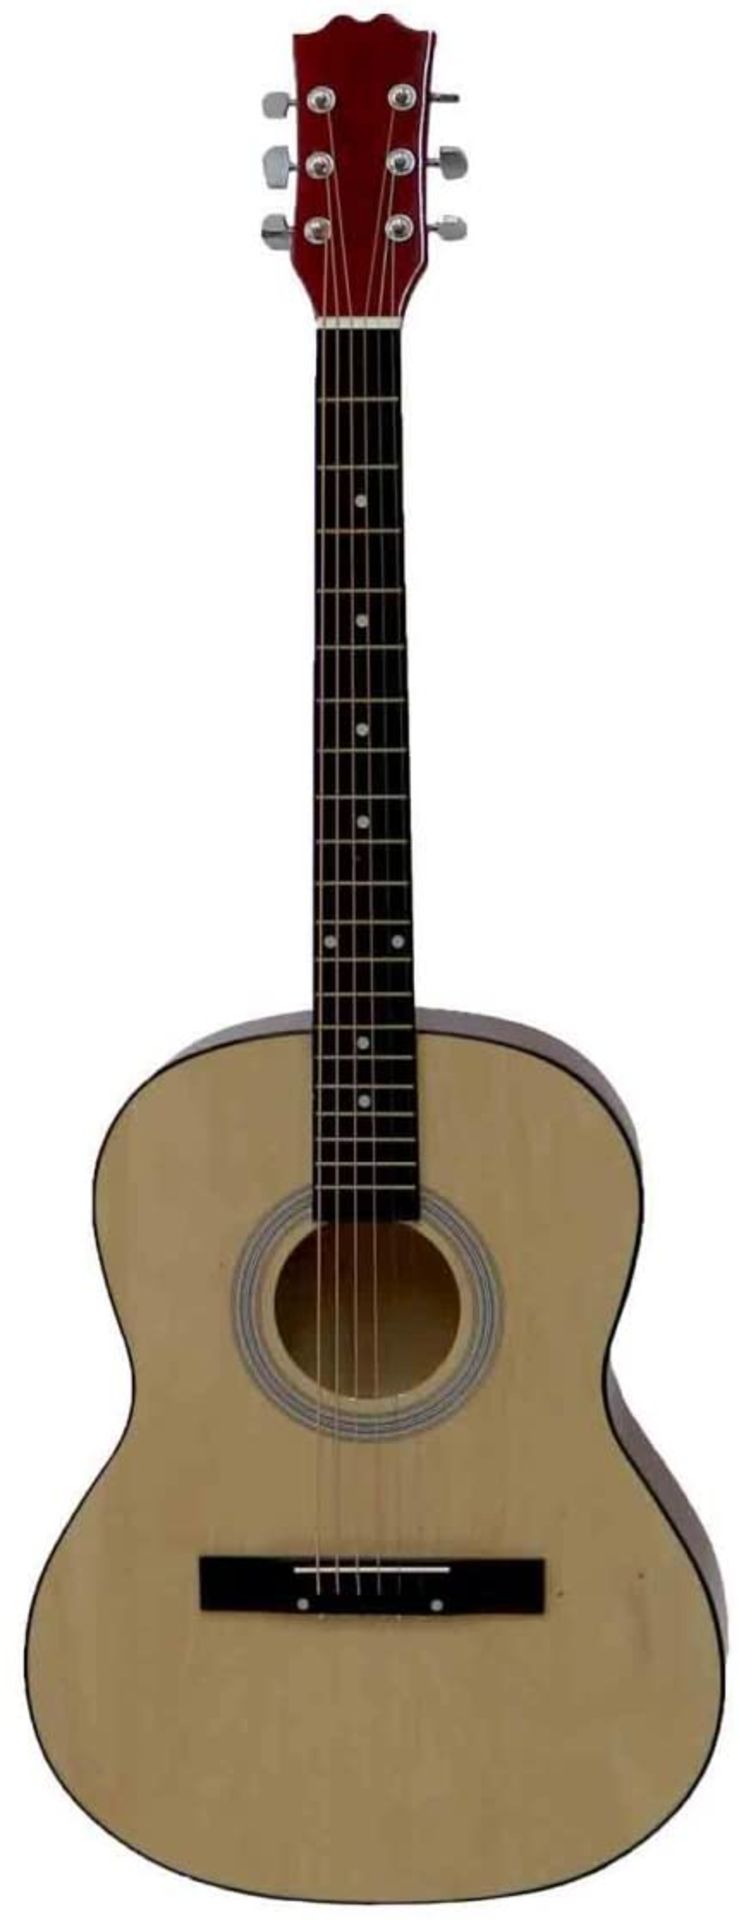 (PP4) 39" Full Size 4/4 6 String Steel Strung Acoustic Guitar Sunset Gold Gloss Varnish Finish... - Image 2 of 2